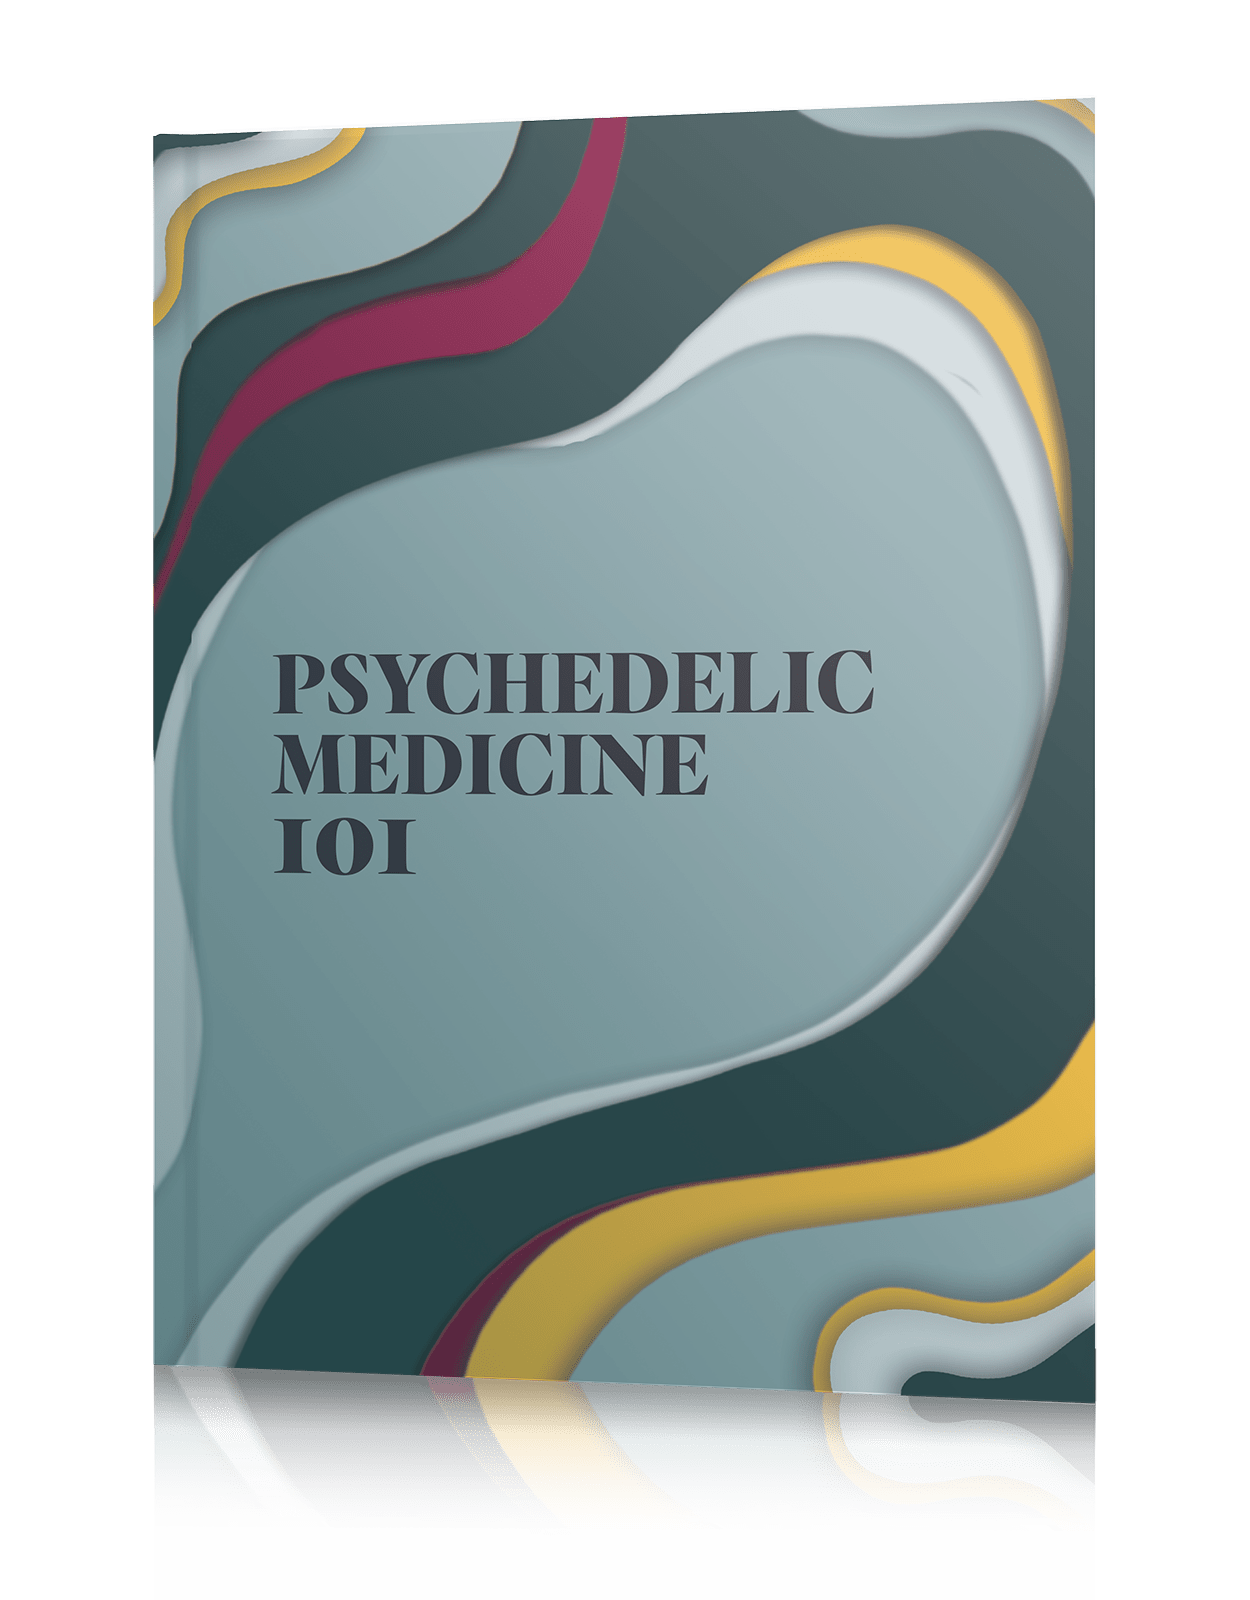 psychedelic medicine 101 book cover 1250w